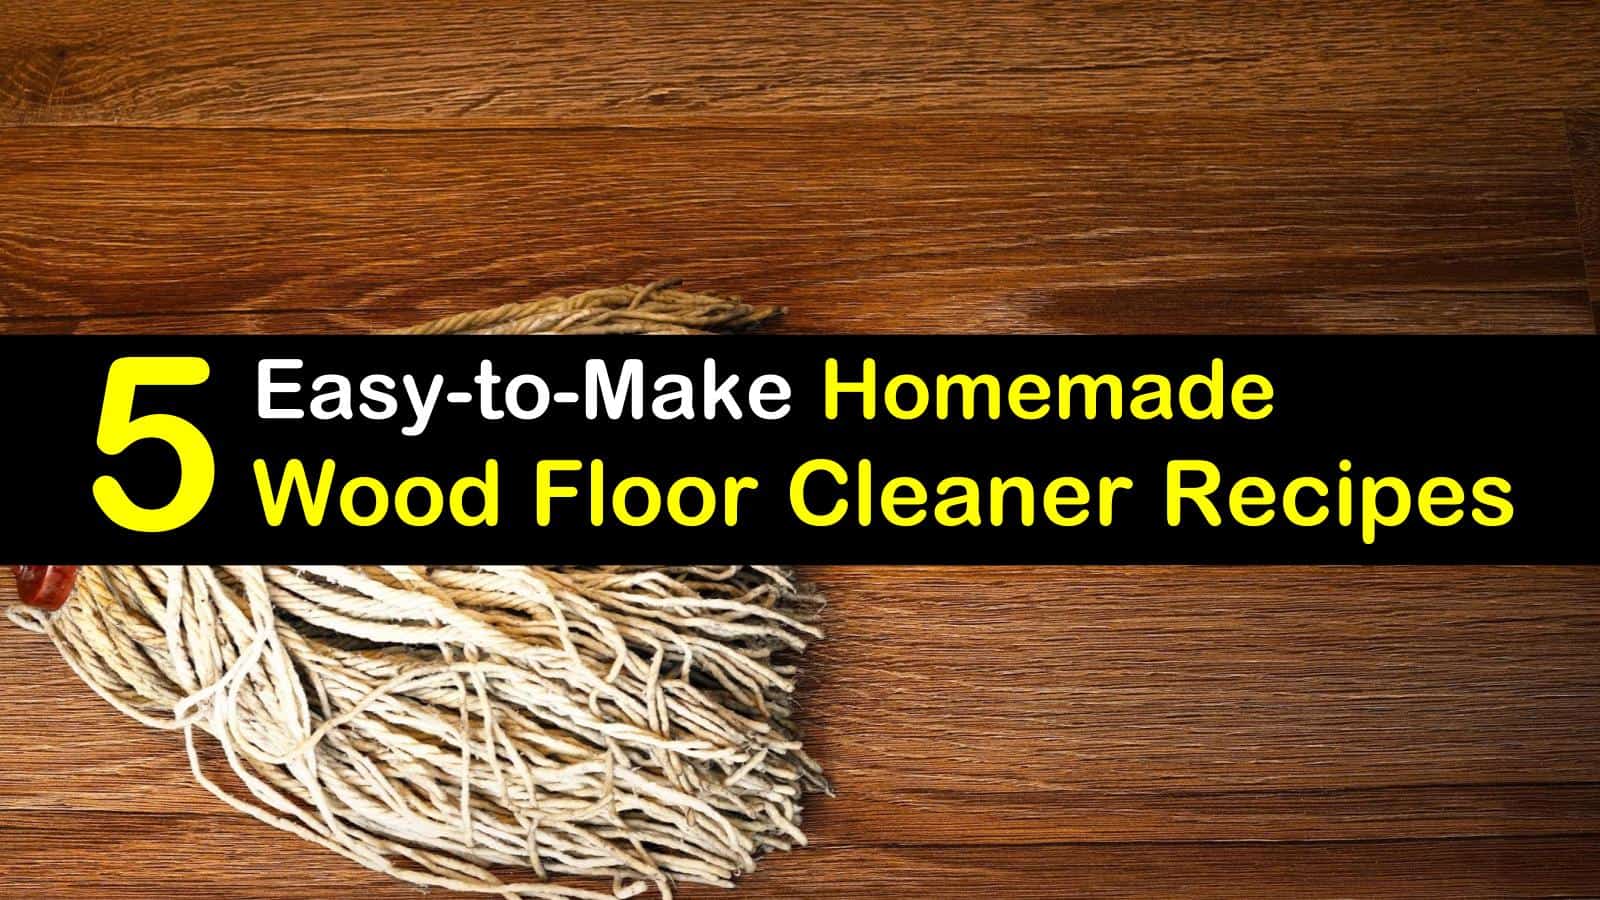 Homemade Wood Floor Cleaner